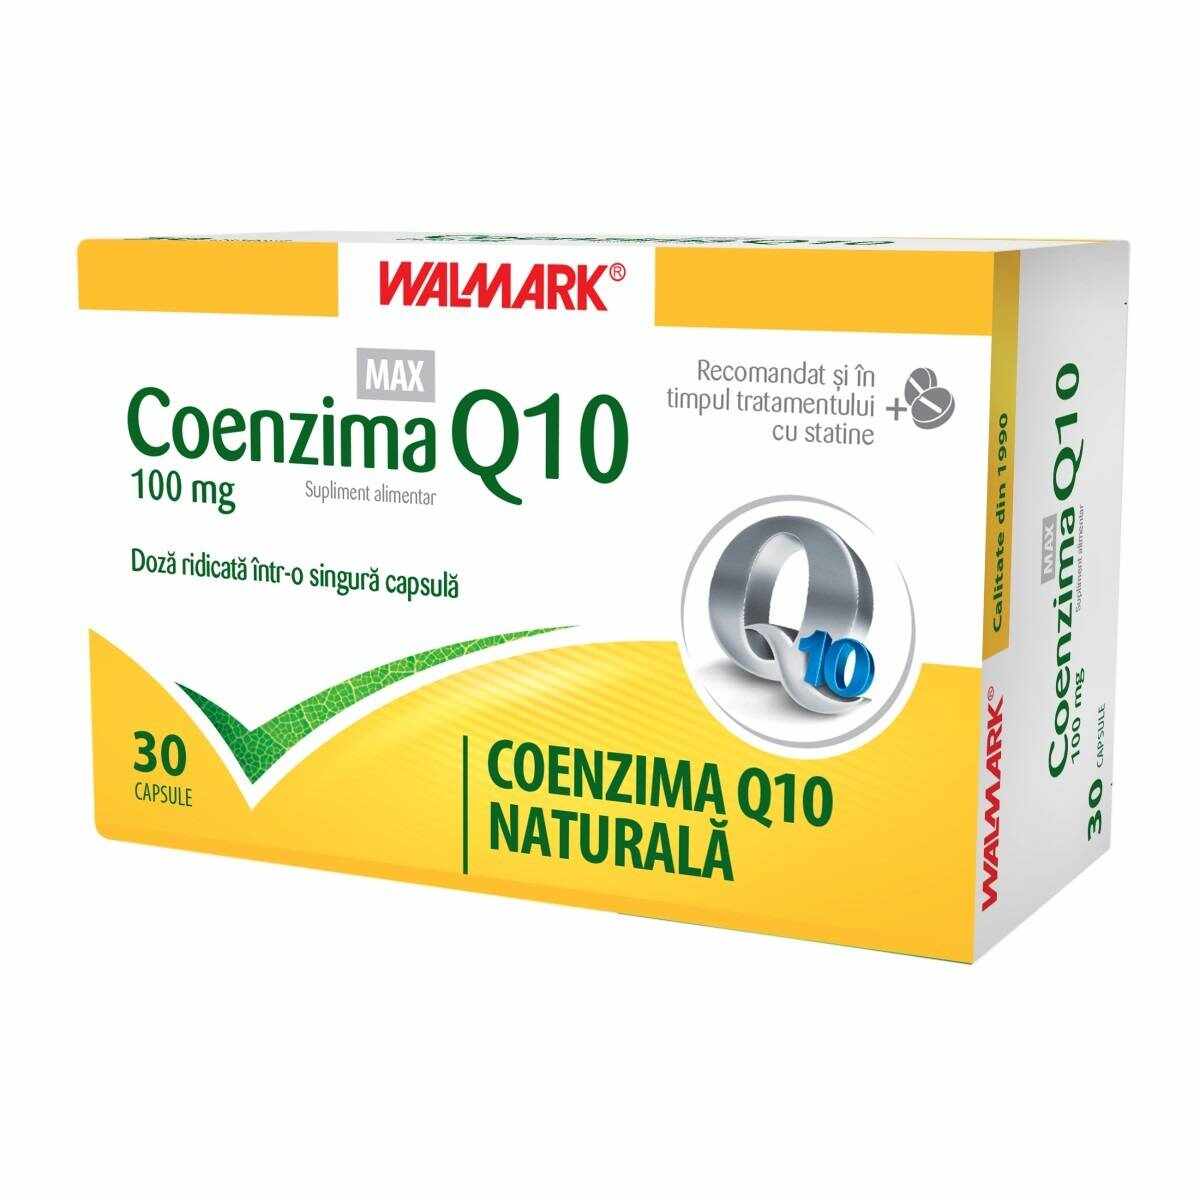 Coenzima Q10 max, 100mg, 30cps - Walmark